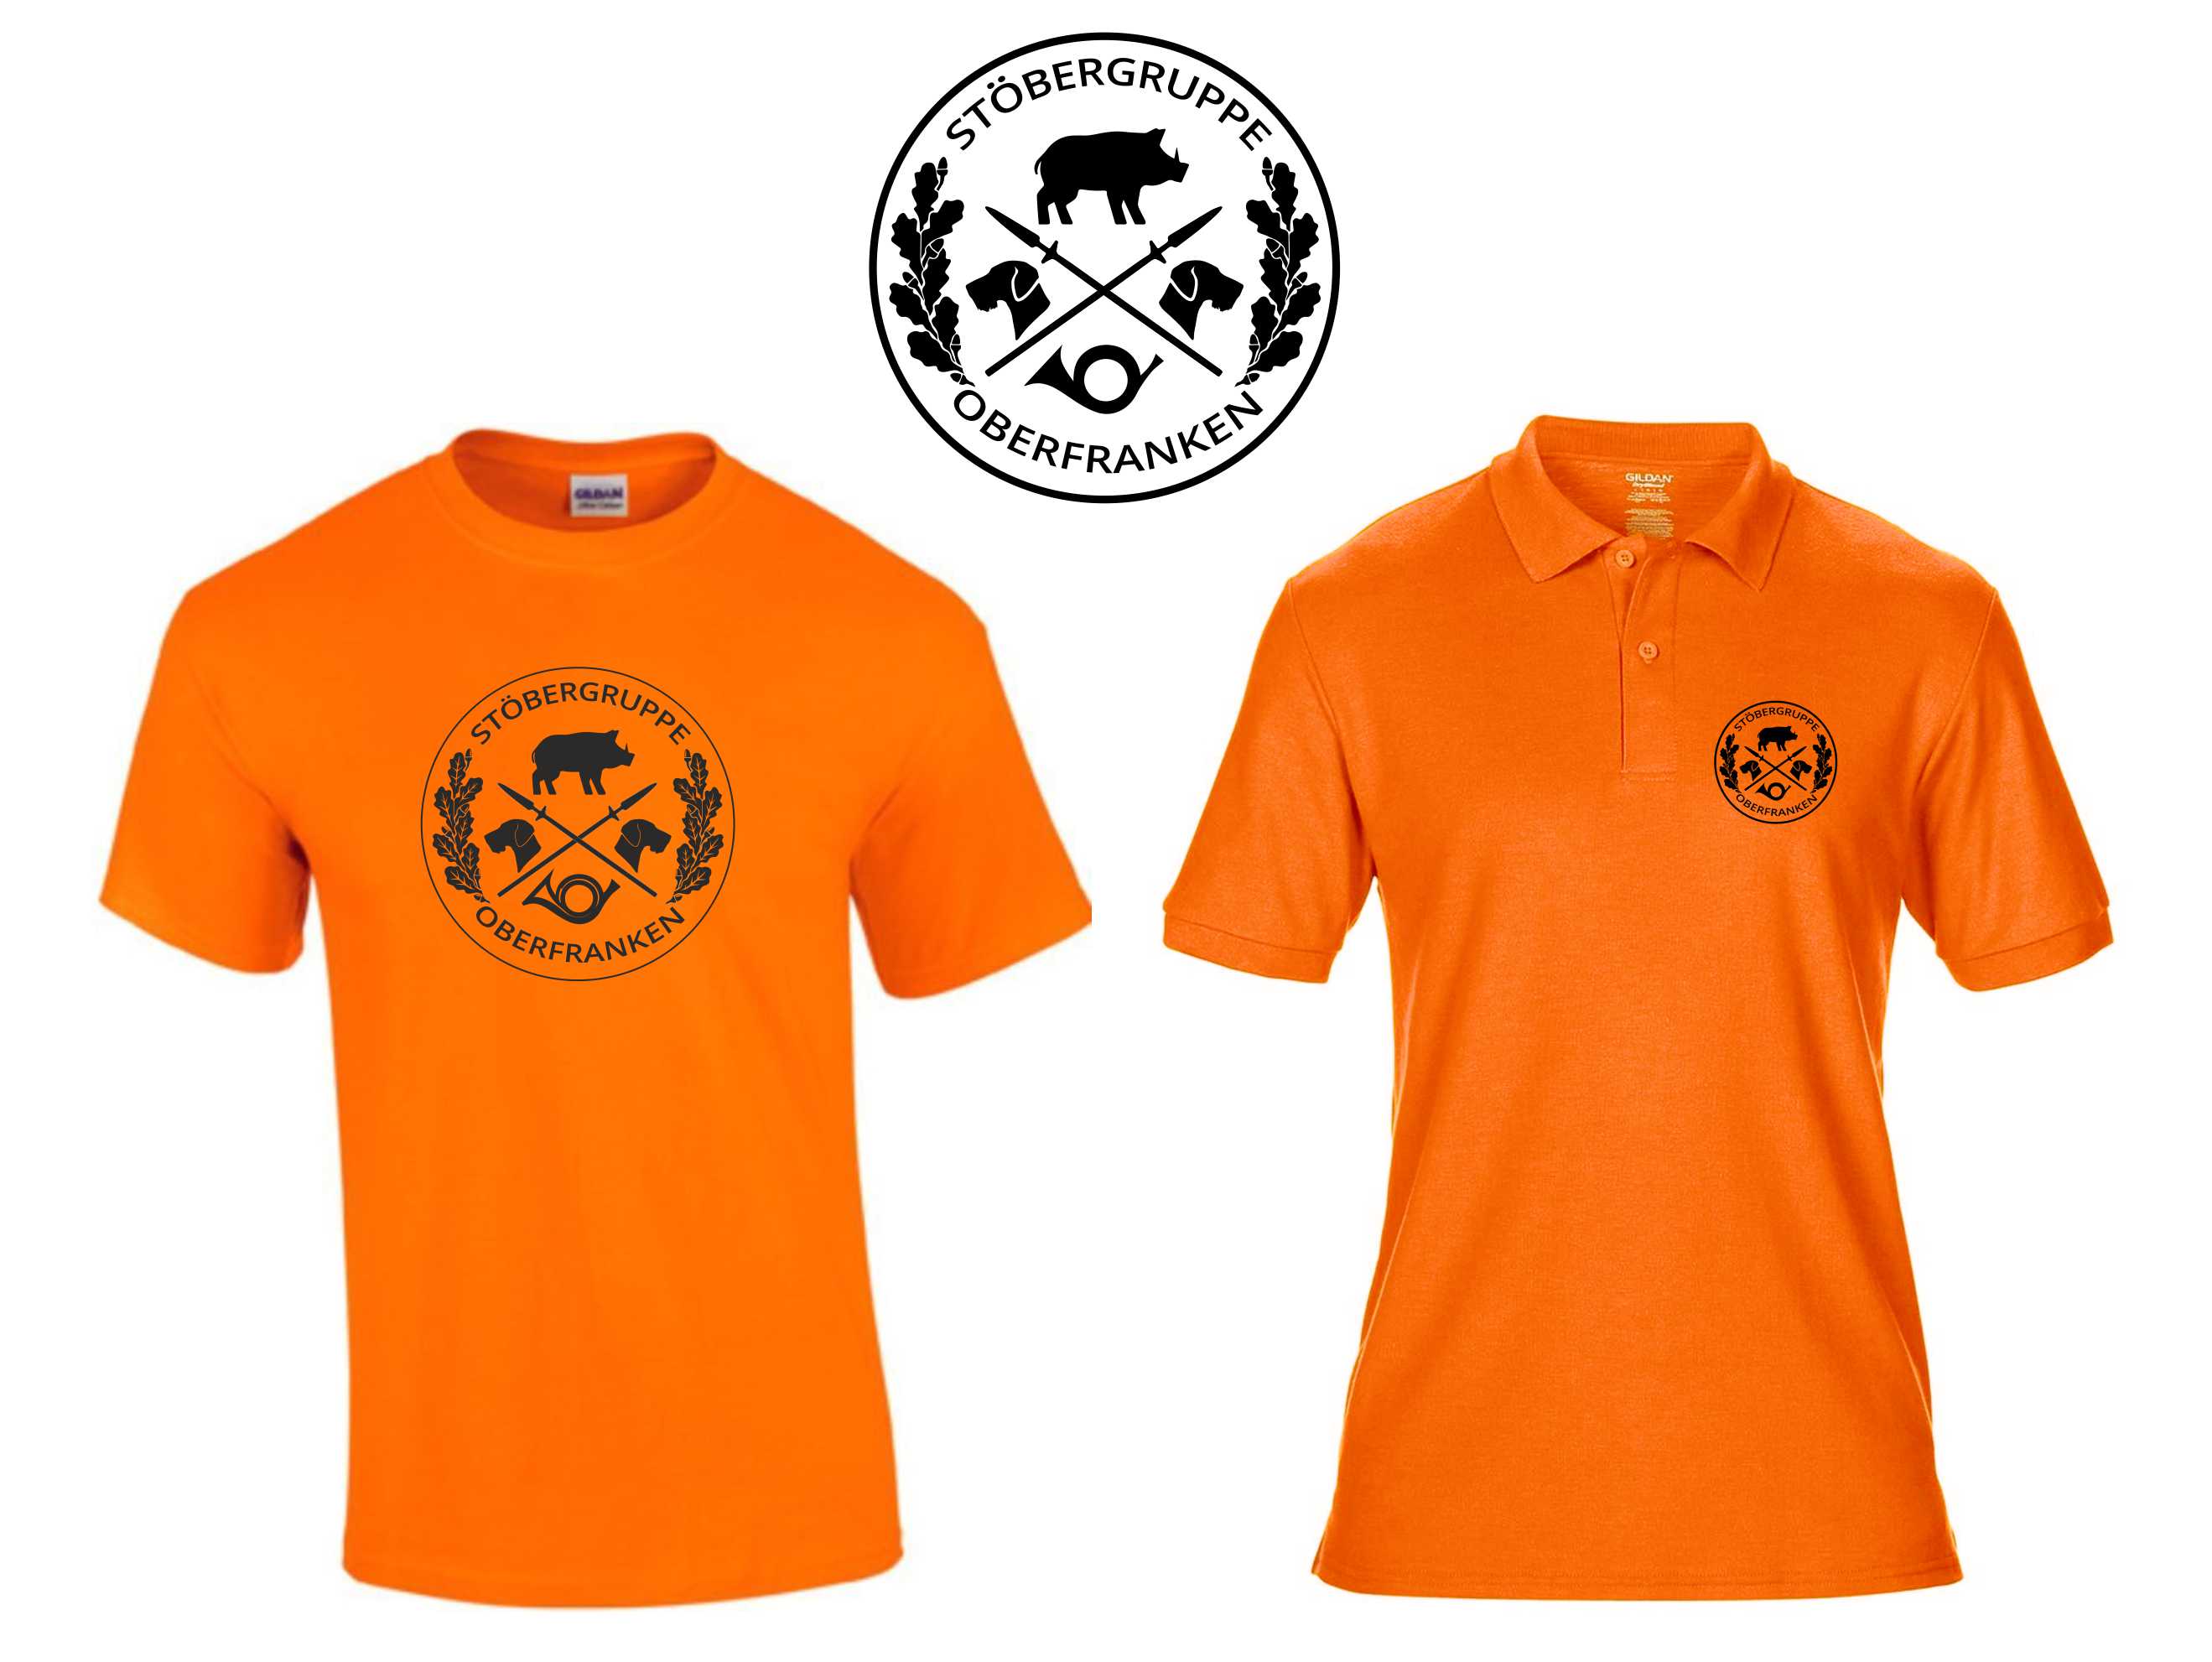 MOSSL Textil- und Werbedruck - T-Shirt & Poloshirt